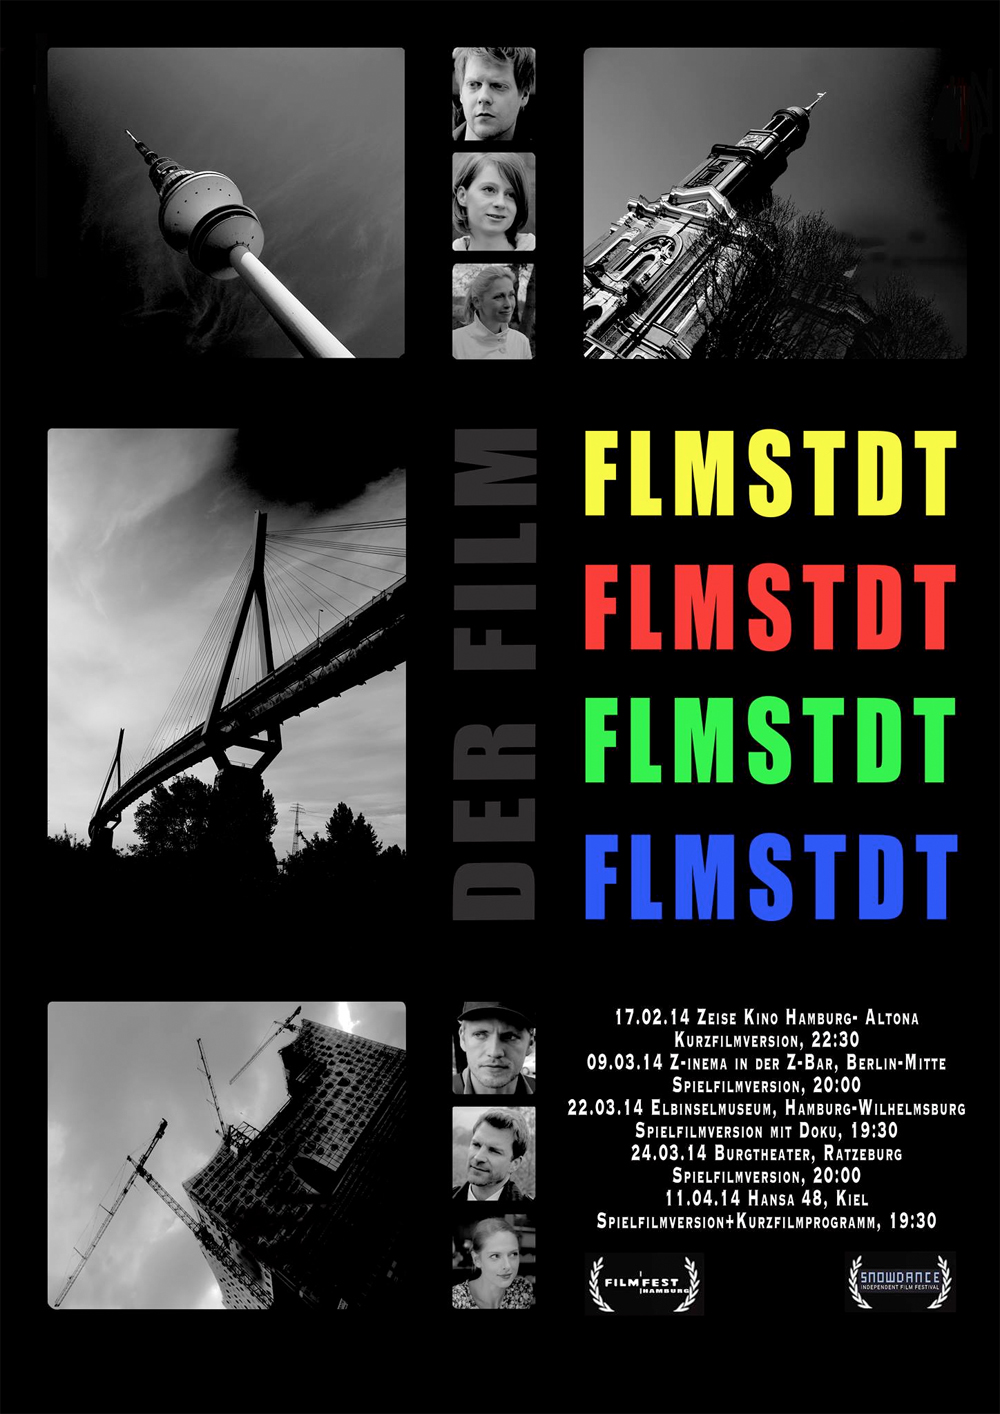 FLMSTDT (FILMSTADT) | WEBSERIE